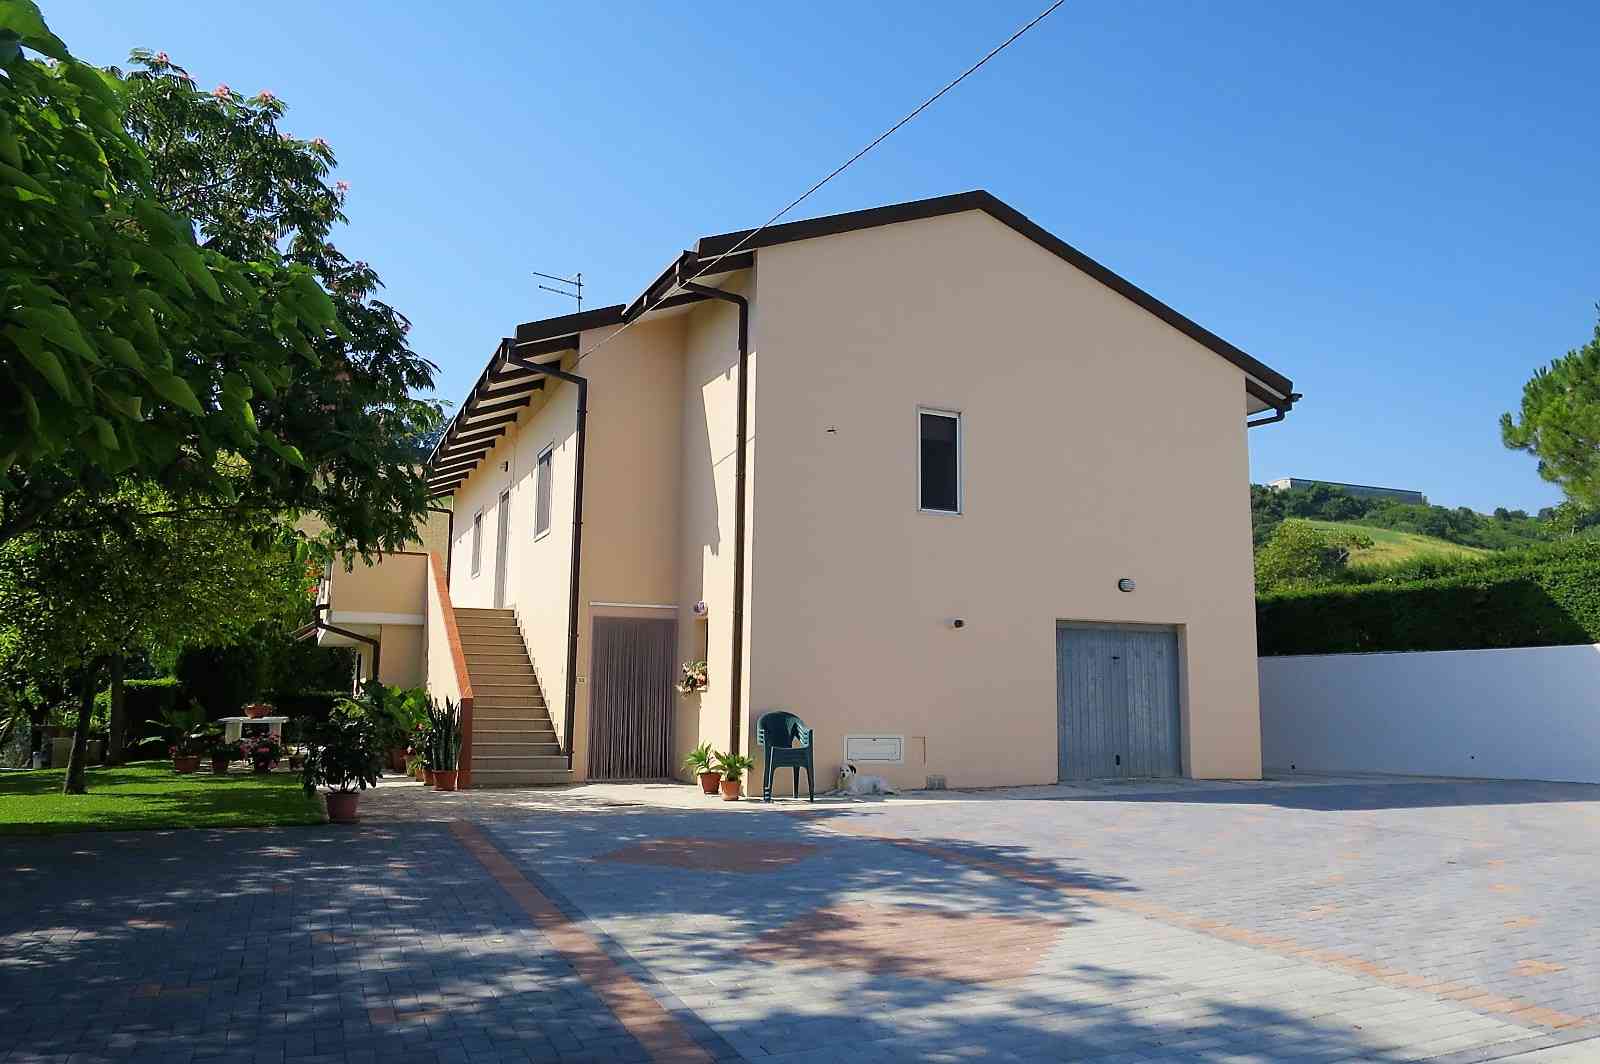 Country Houses Country Houses for sale Loreto Aprutino (PE), Casa Nespolo - Loreto Aprutino - EUR 262.763 300